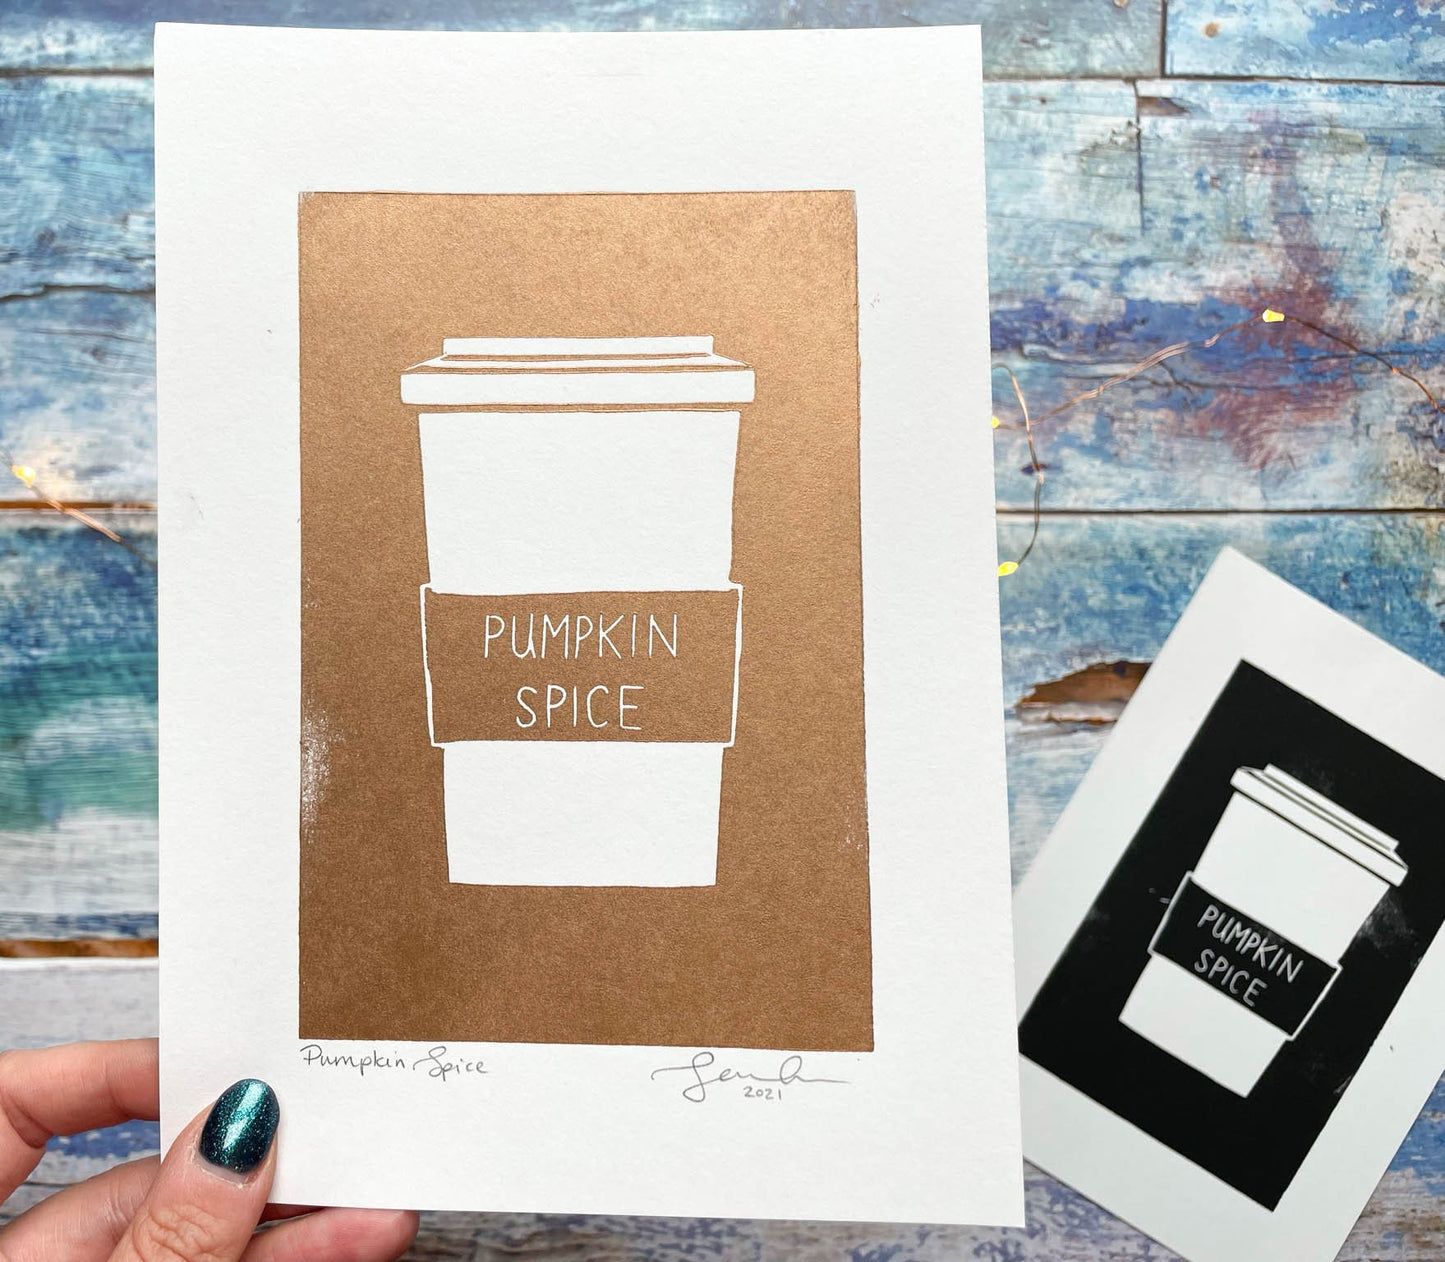 A simplistic lino print of a pumpkin spice latte in a takeout cup in copper